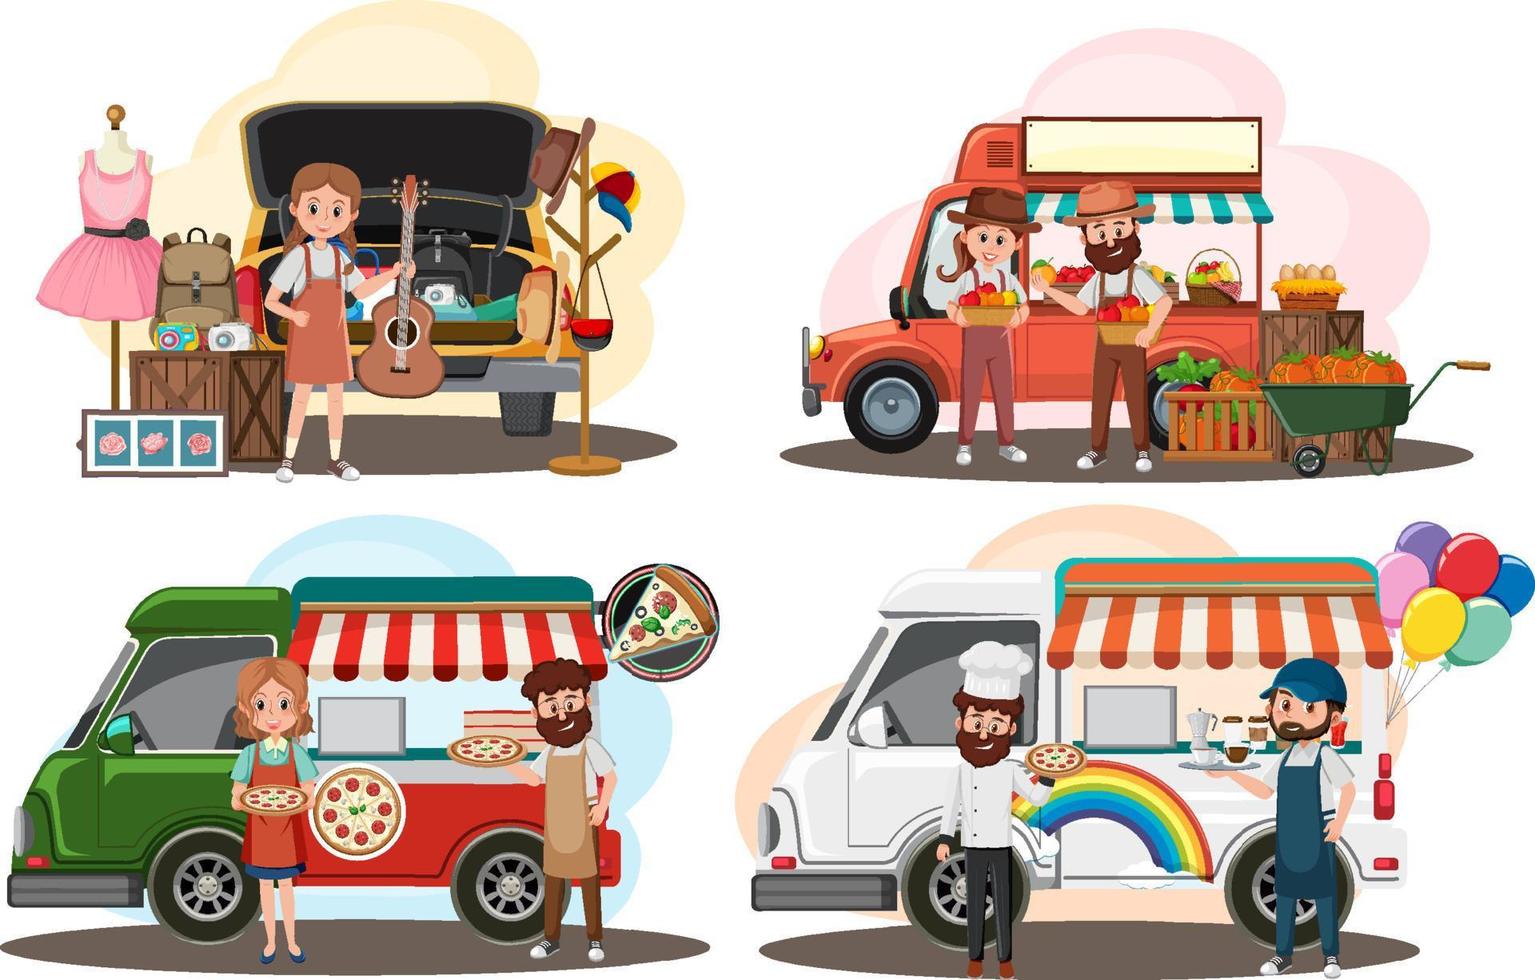 Flea market concept with set of different food trucks vector